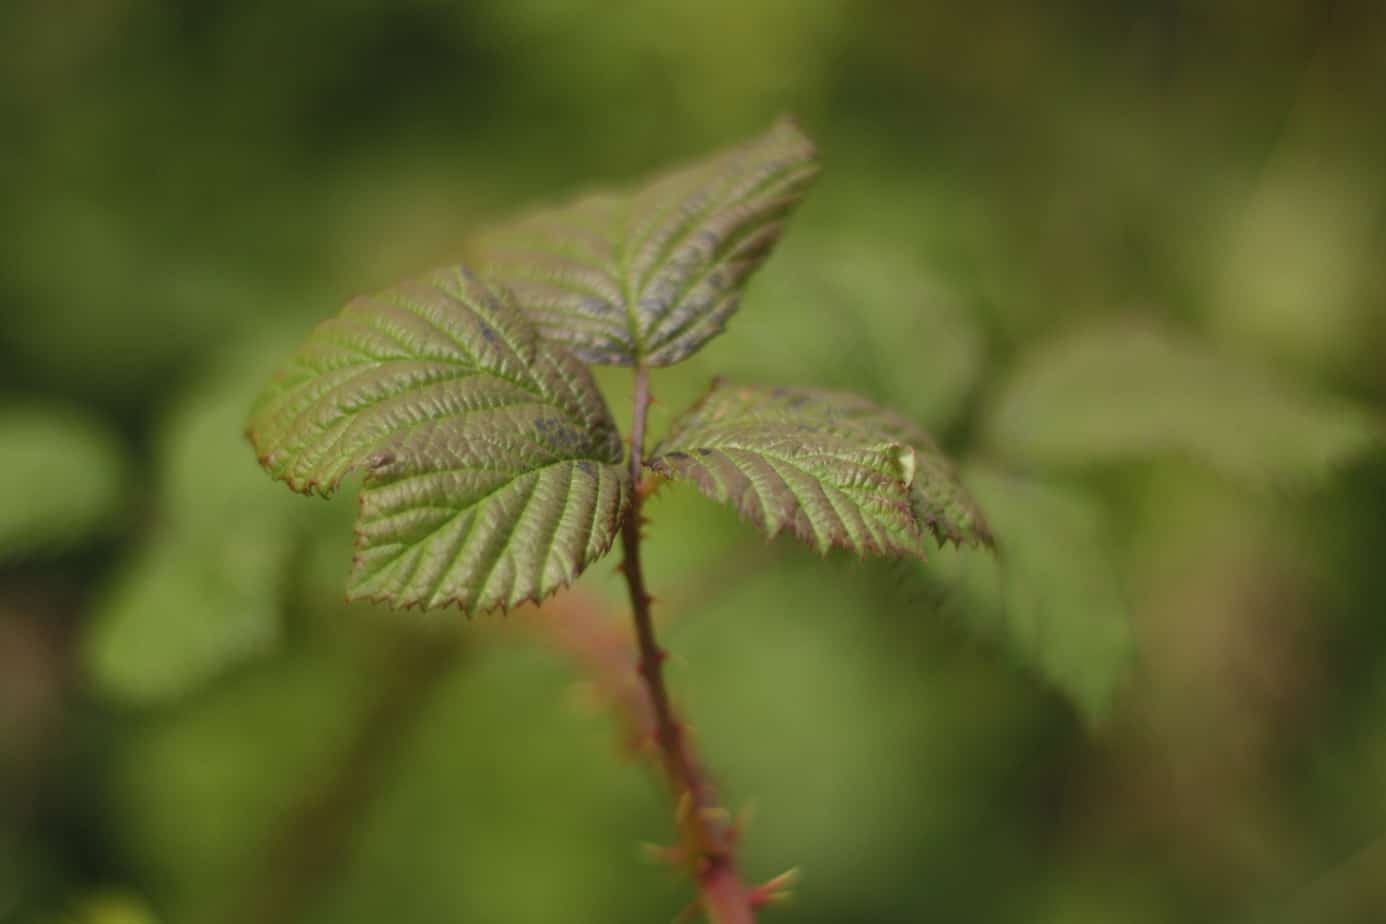 Blackberry Leaf